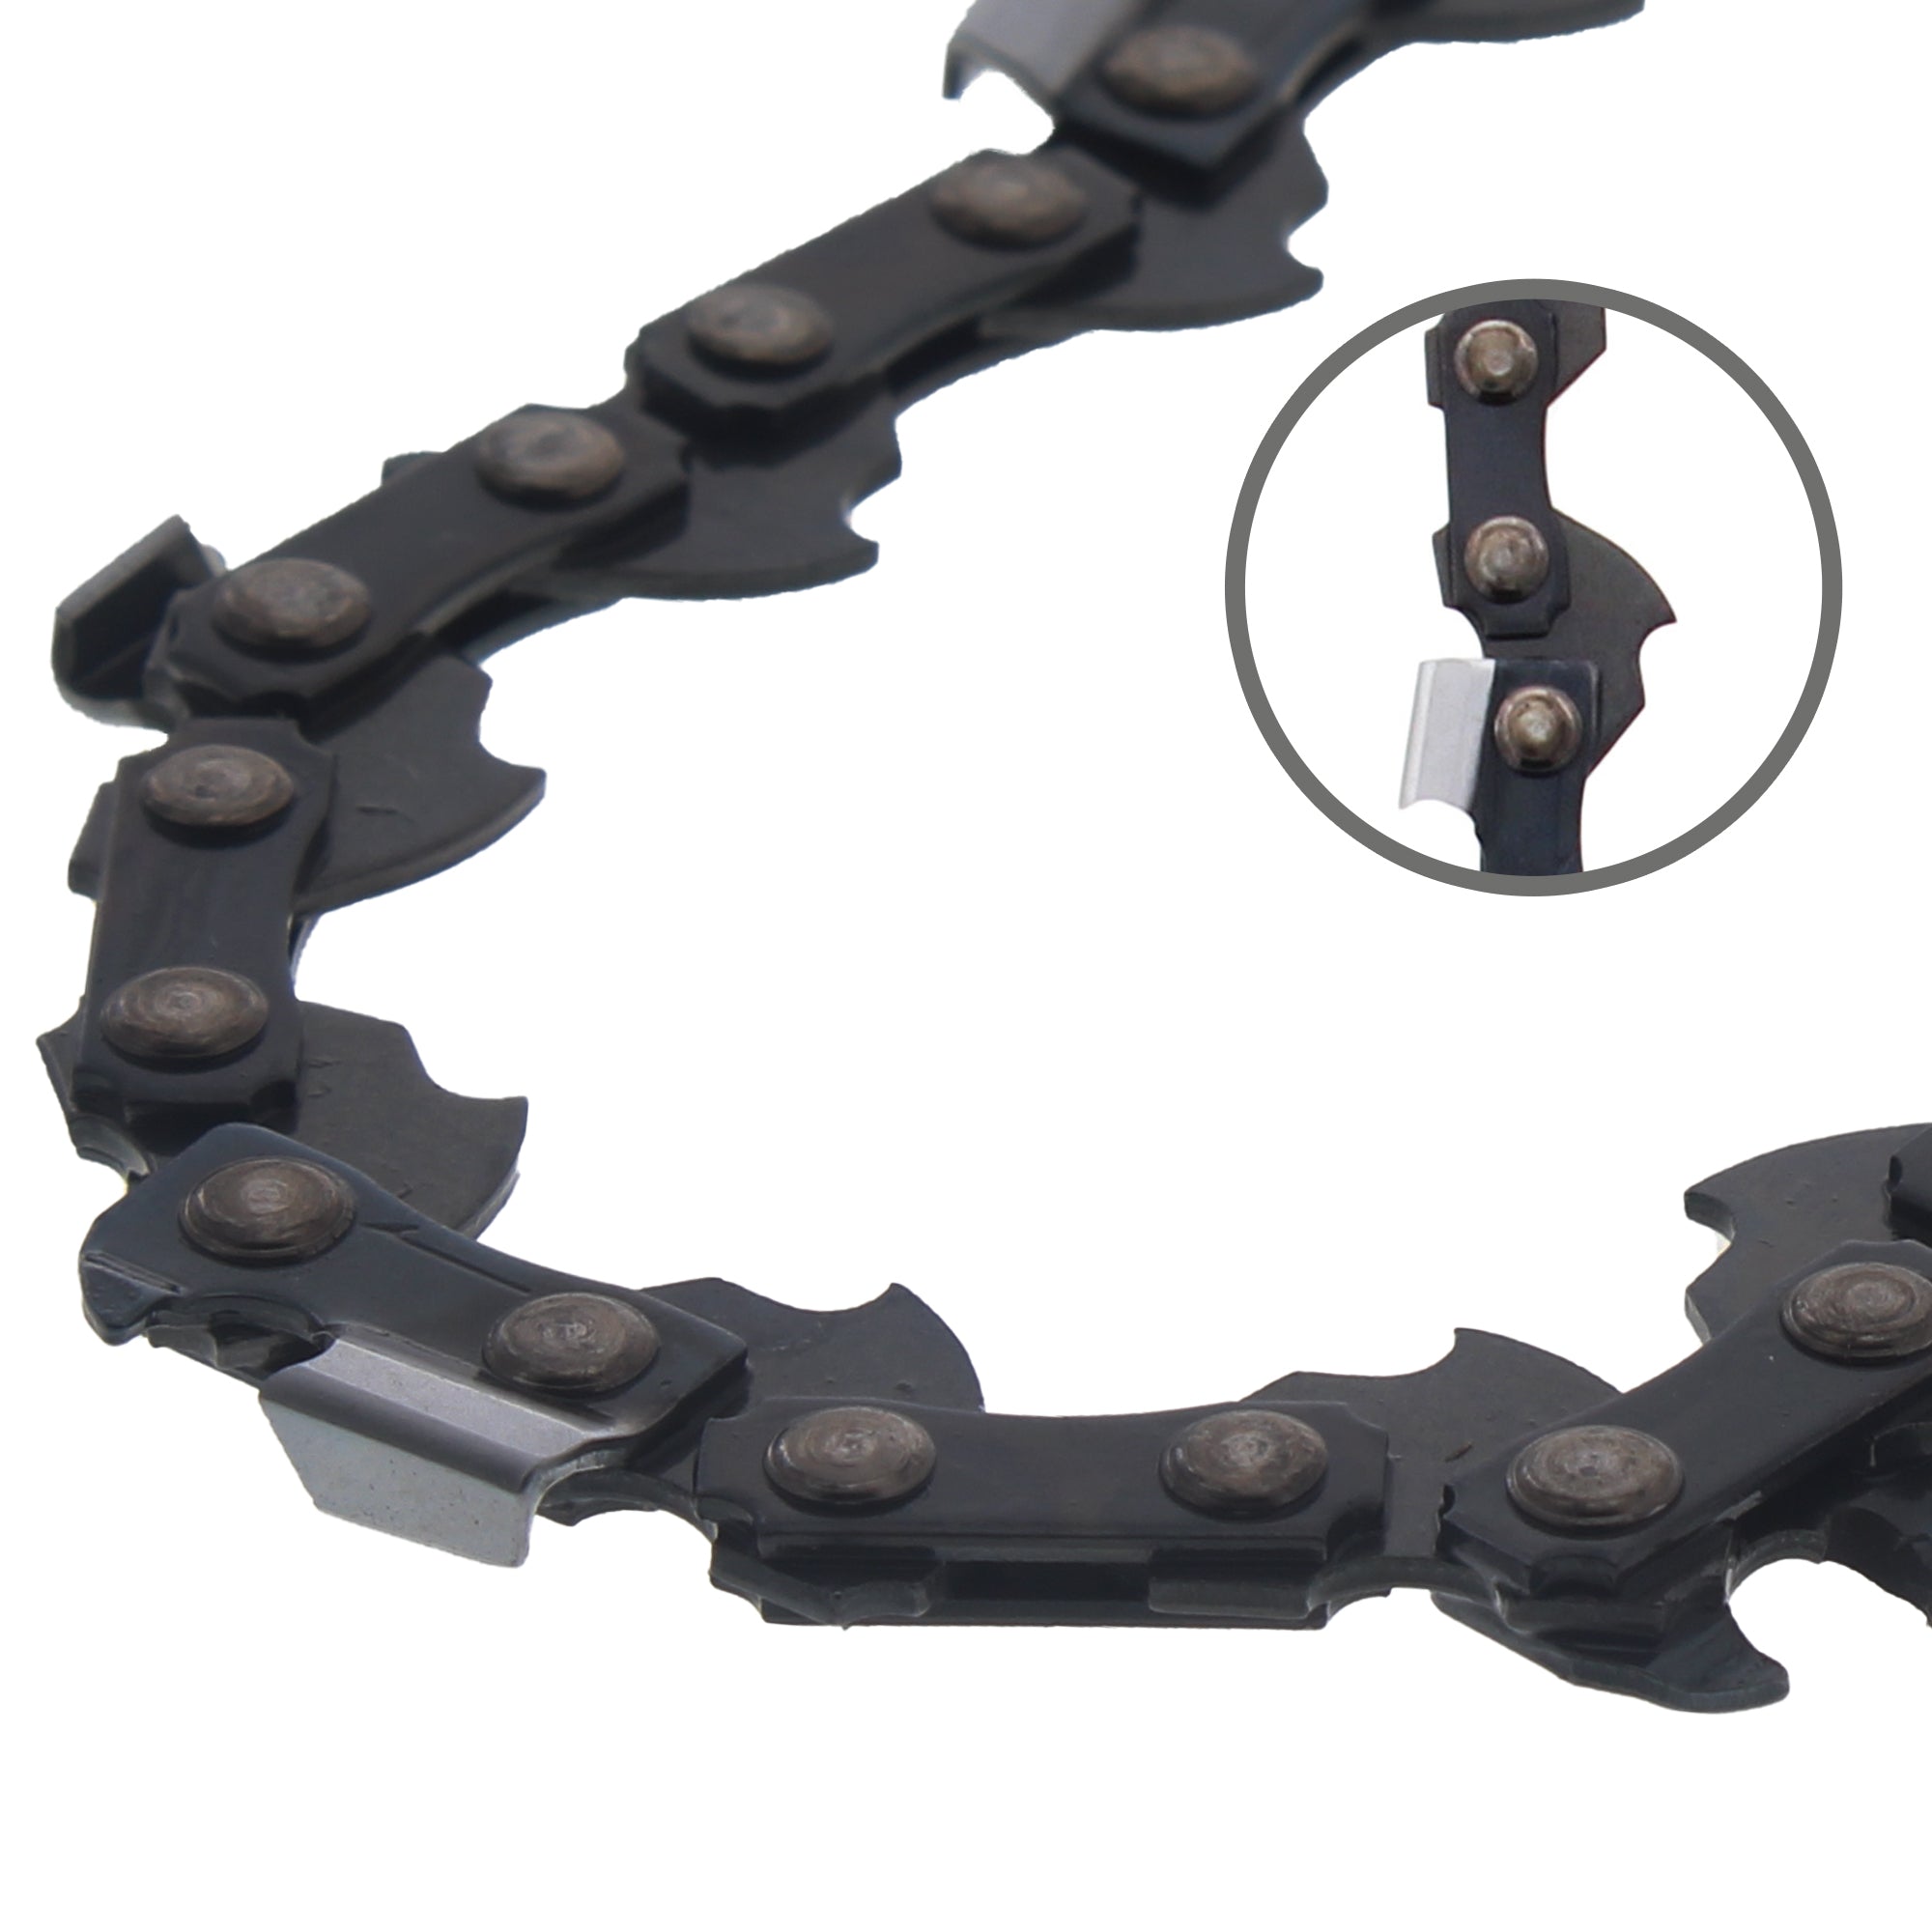 Chainsaw Chain Bulk Reel Semi Chisel 100 Foot .043 3/8 Pitch Low Profile